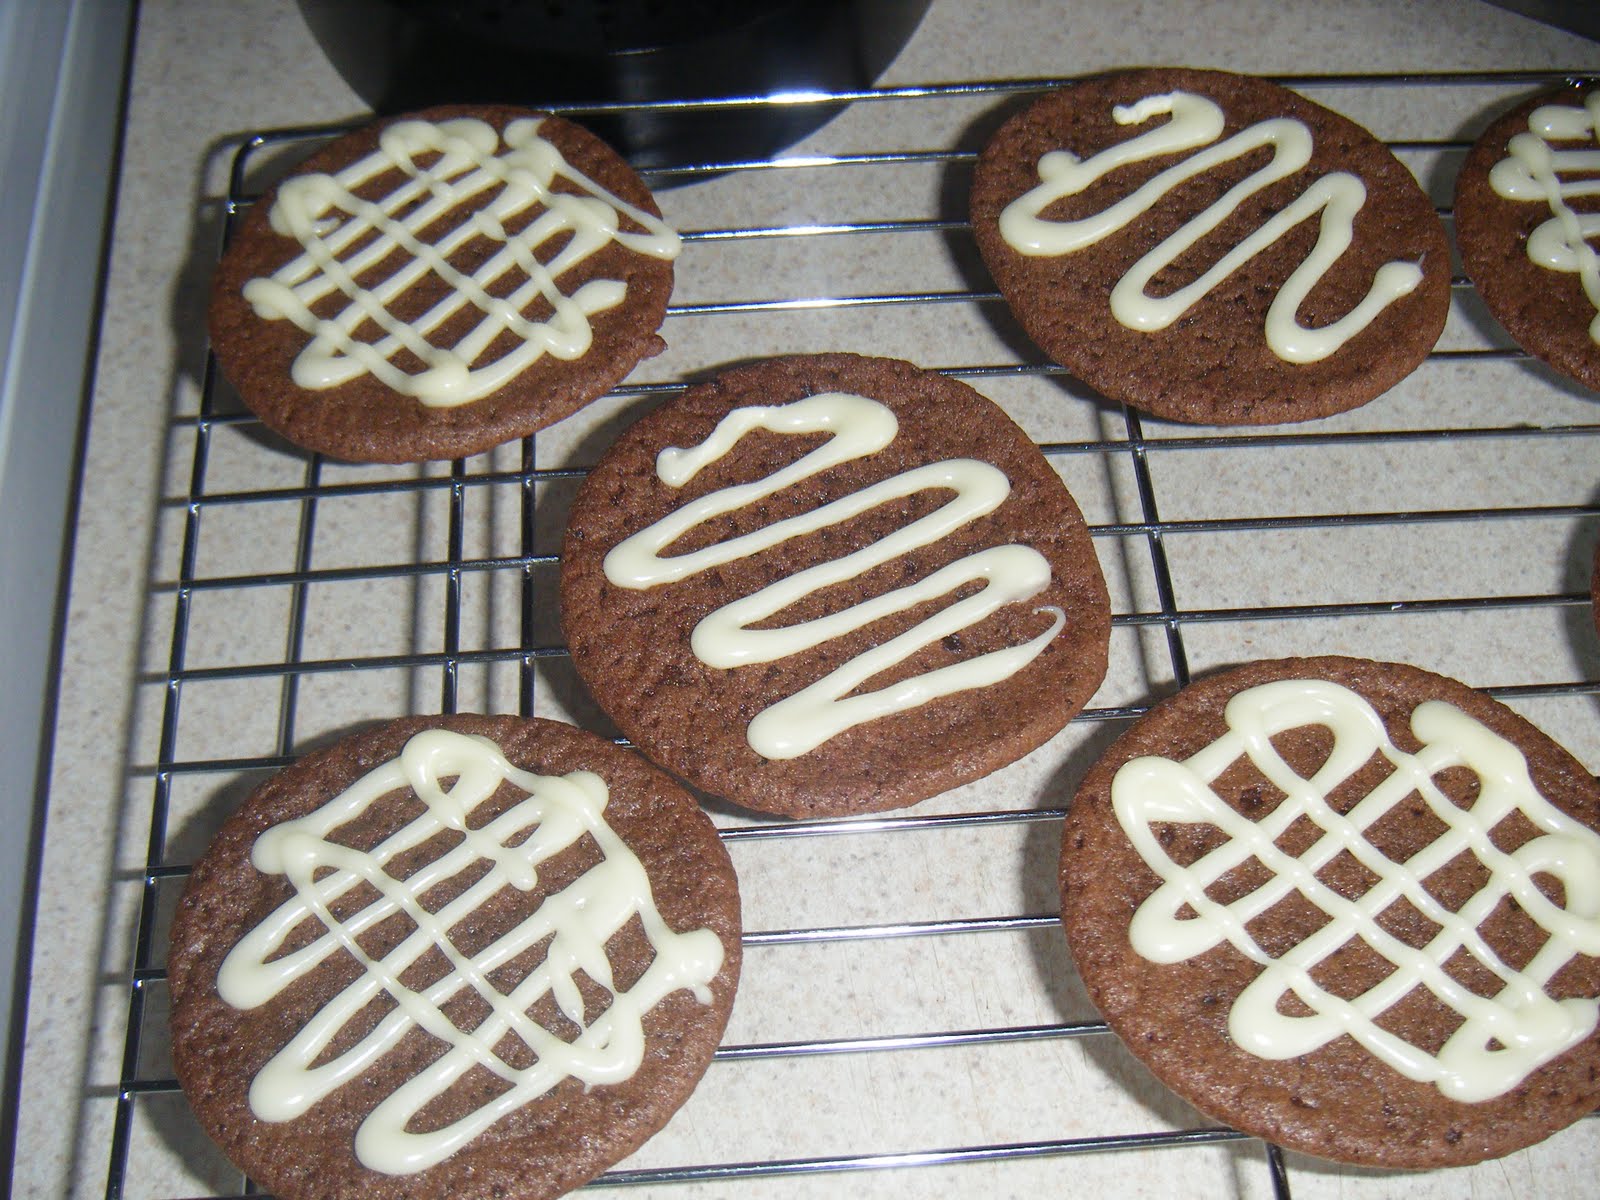 http://3.bp.blogspot.com/-RMyZp94f_Yk/TjmS8G8BKzI/AAAAAAAAAHI/2fVoAJ94OiU/s1600/Double+chocolate+cookies+4.JPG